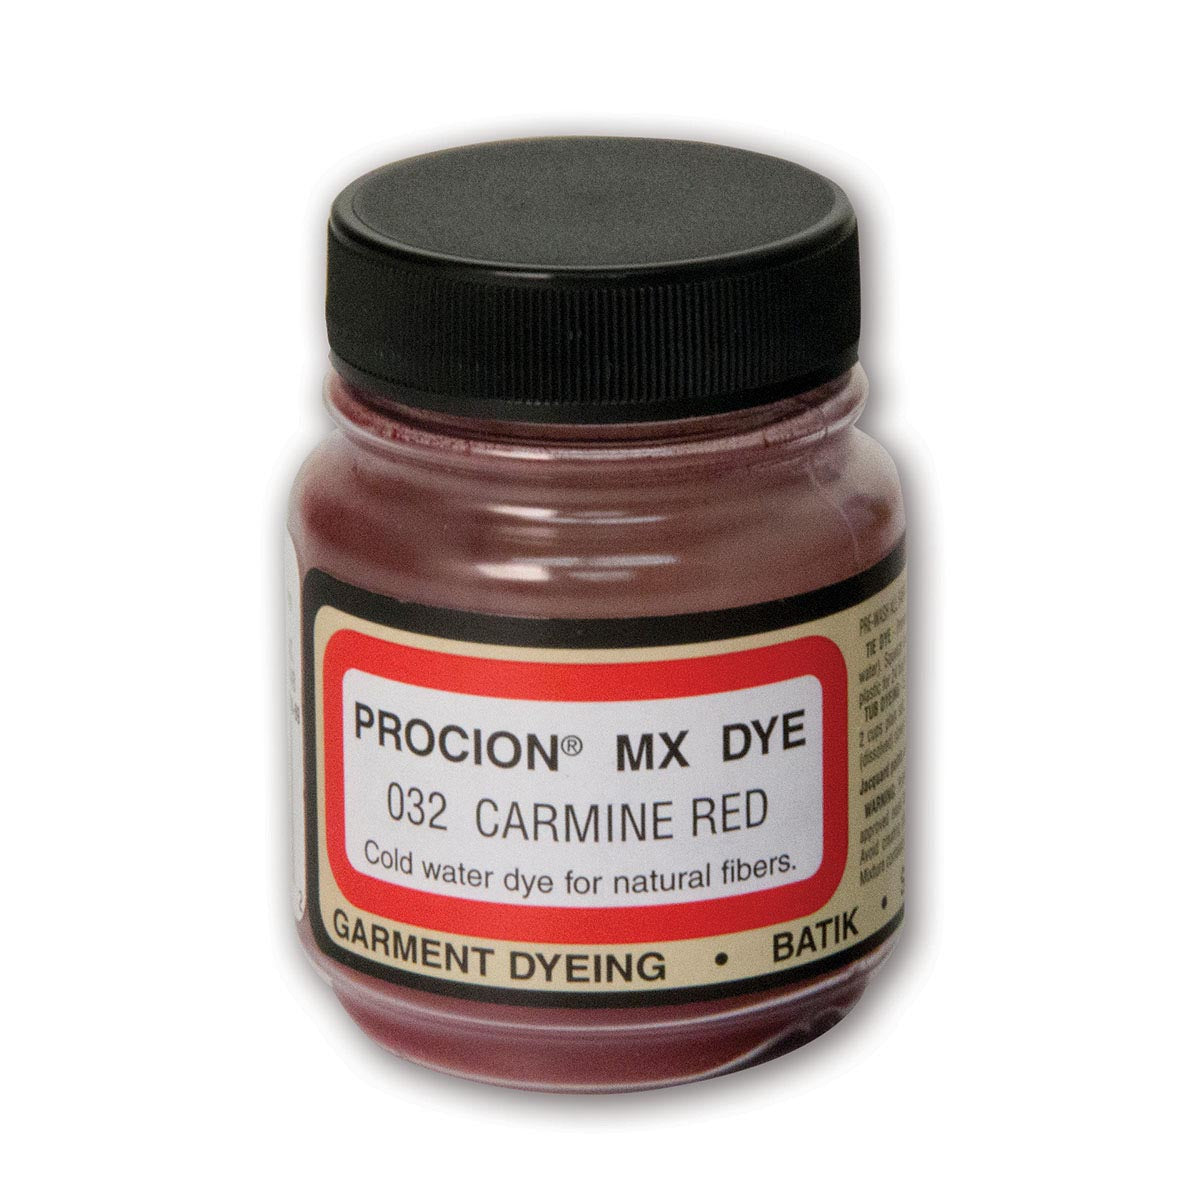 Jacquard - Procion MX Dye - Stoff Textil - Karminrot 032